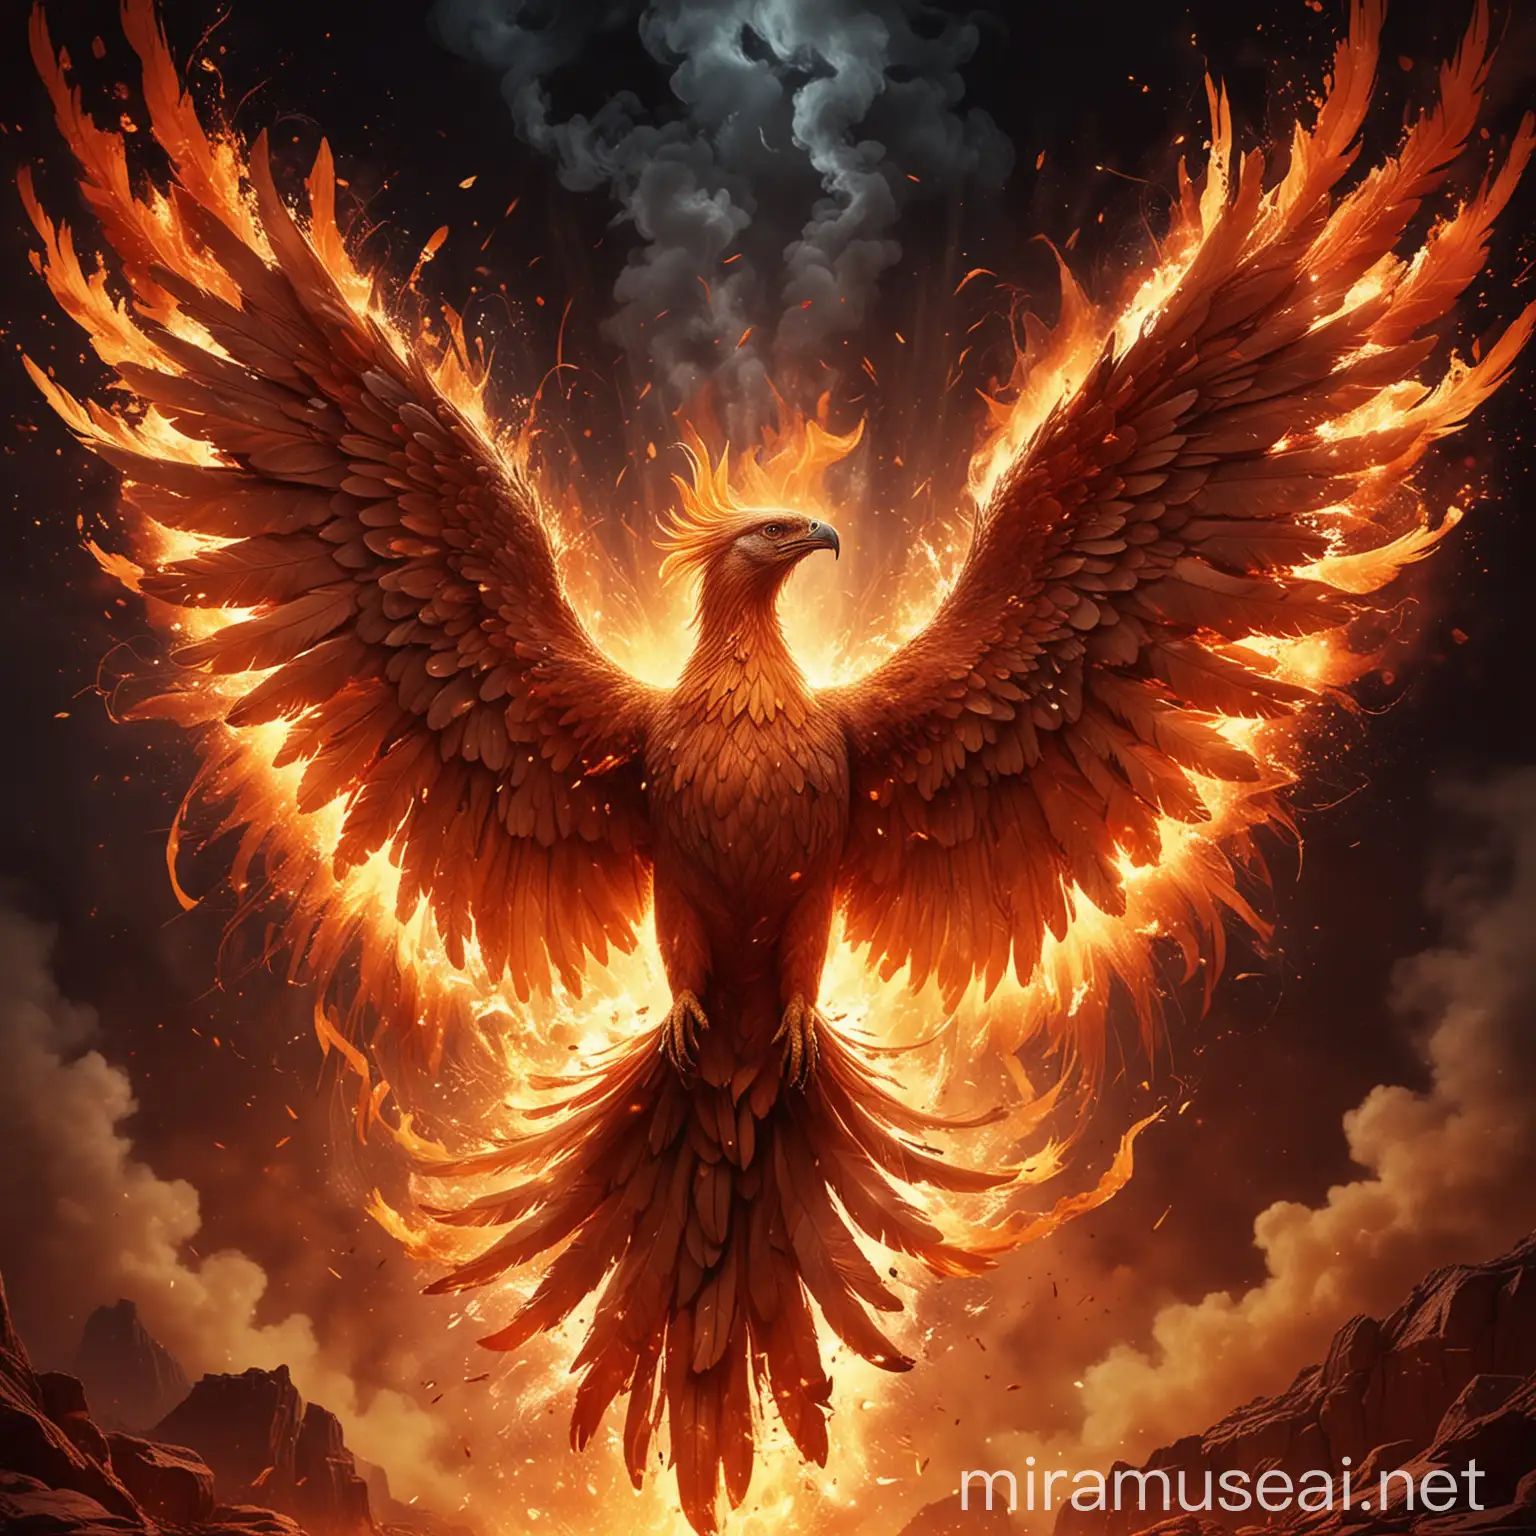 Majestic Phoenix Breaking Free Symbol of Rebirth and Transformation